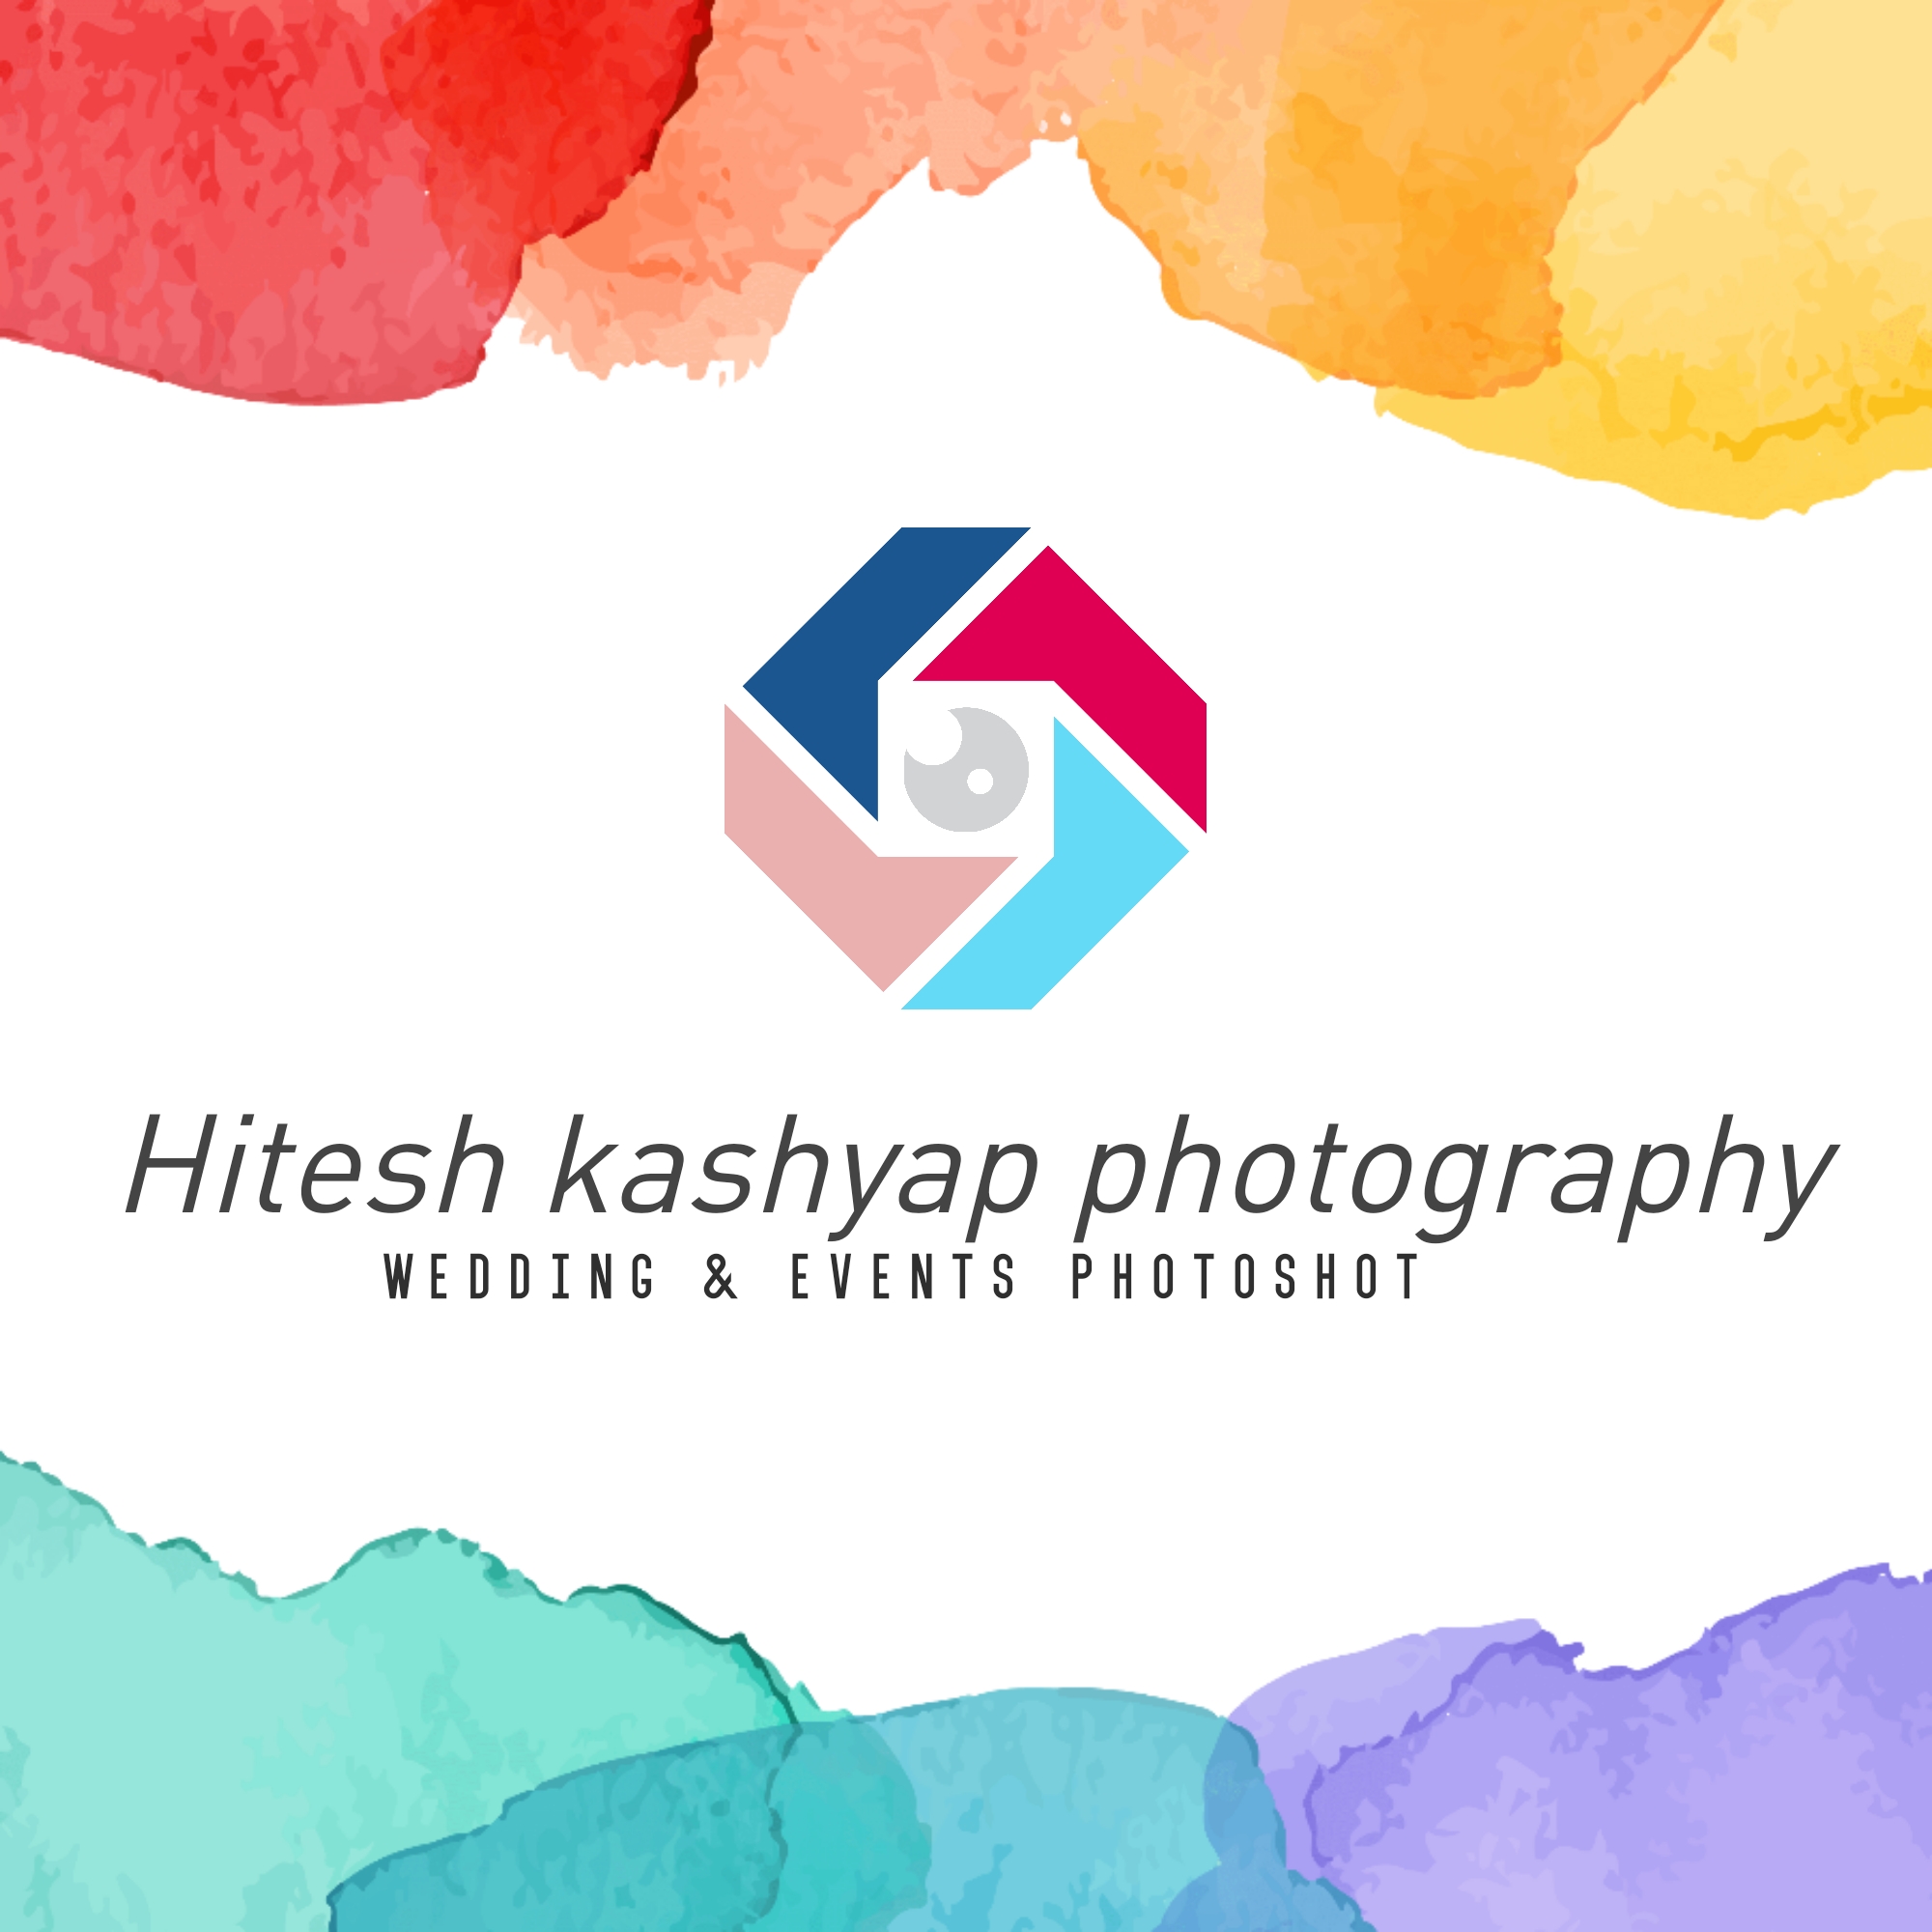 Hitesh kashyap photography|Photographer|Event Services